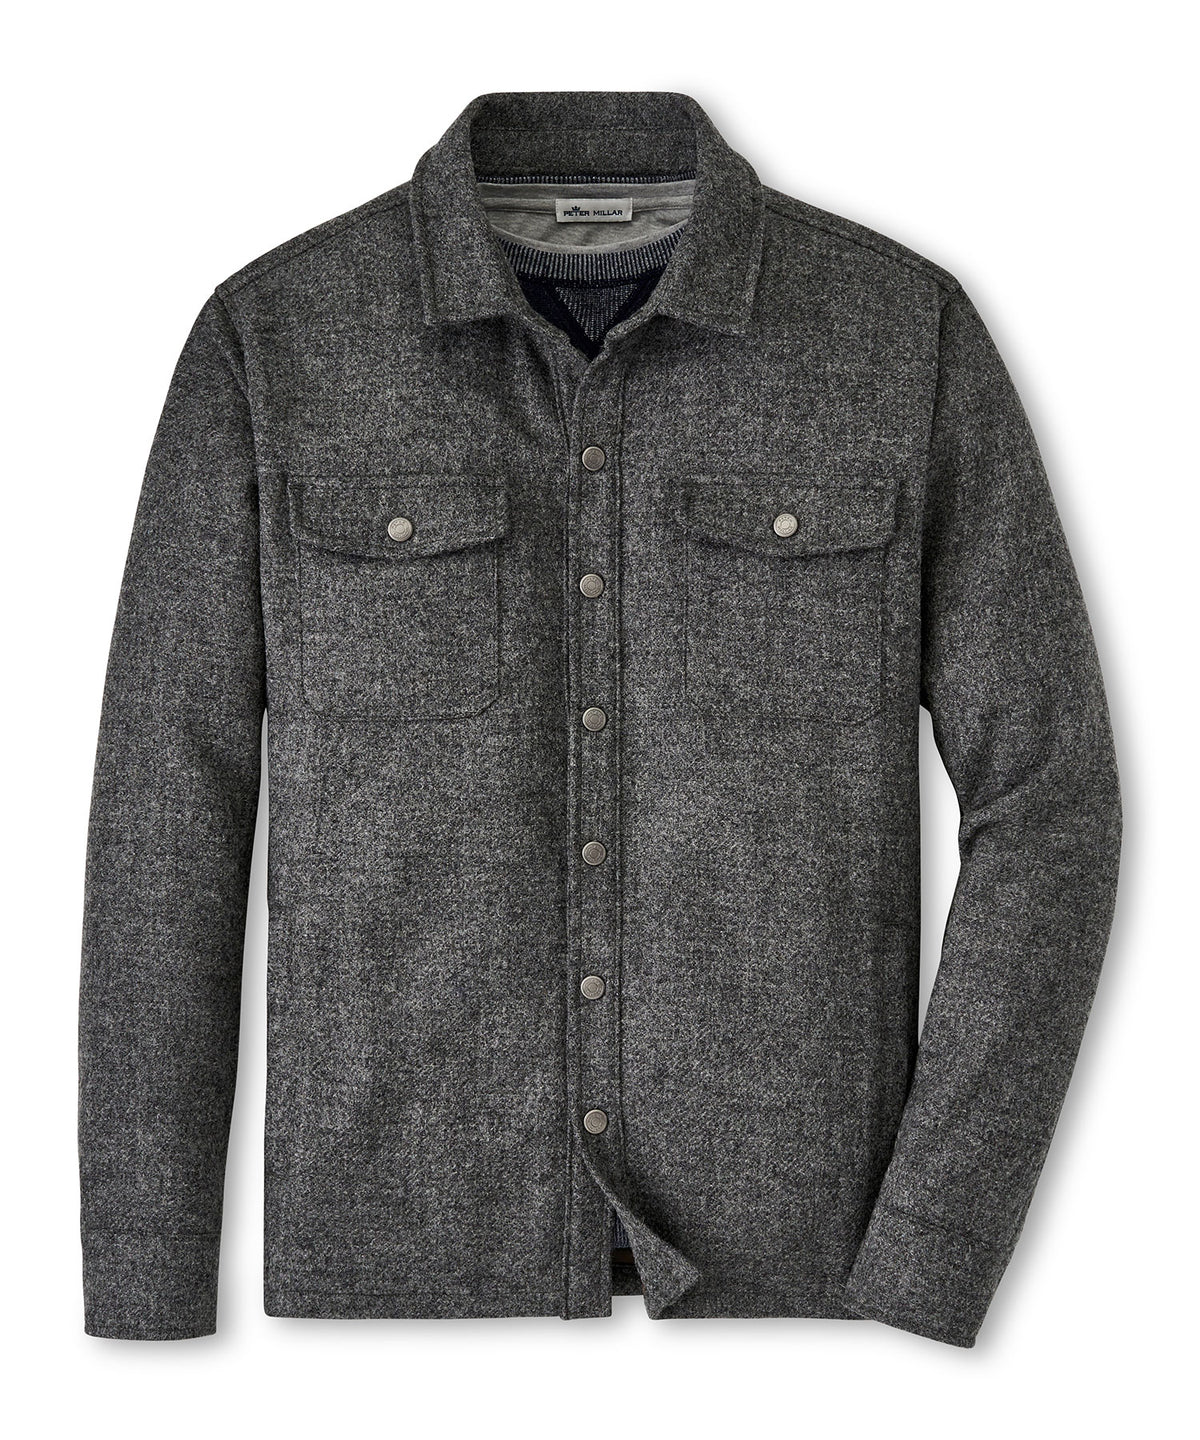 Peter Millar Yorkshire Wool Shirt Jacket, Big & Tall